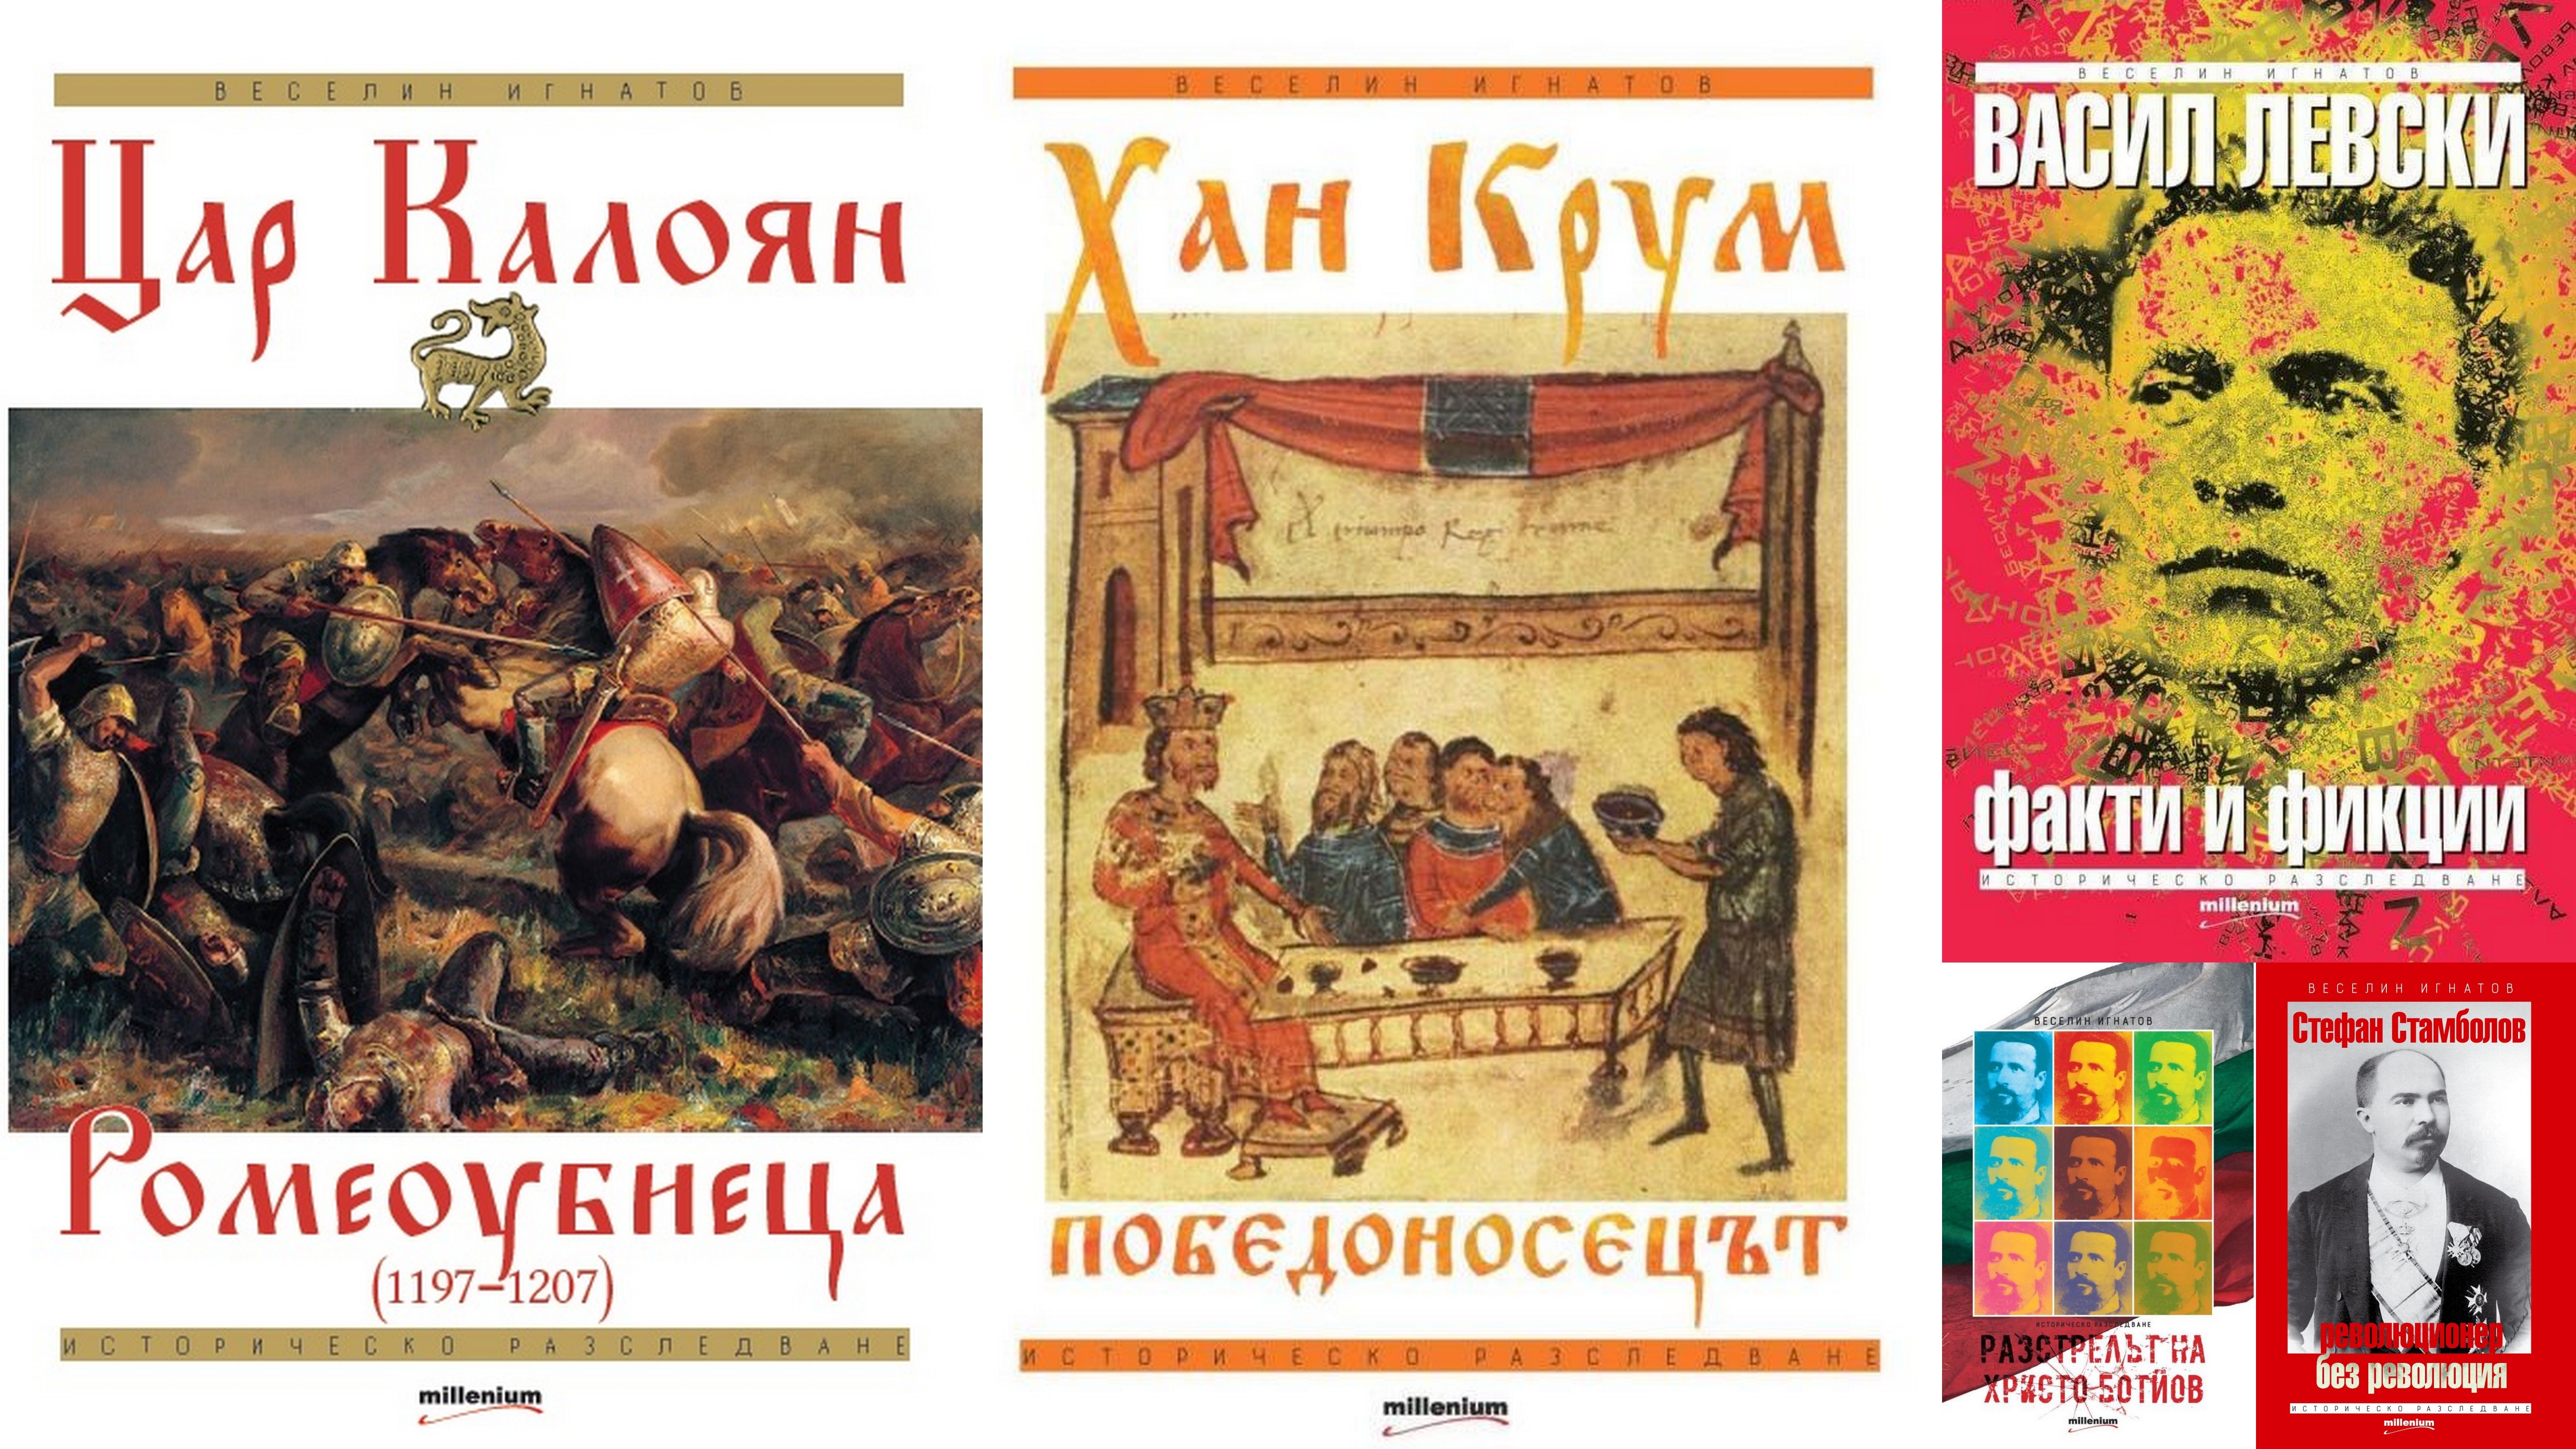 “Цар Калоян. Ромеоубиеца (1197-1207)” – нова книга от Милениум